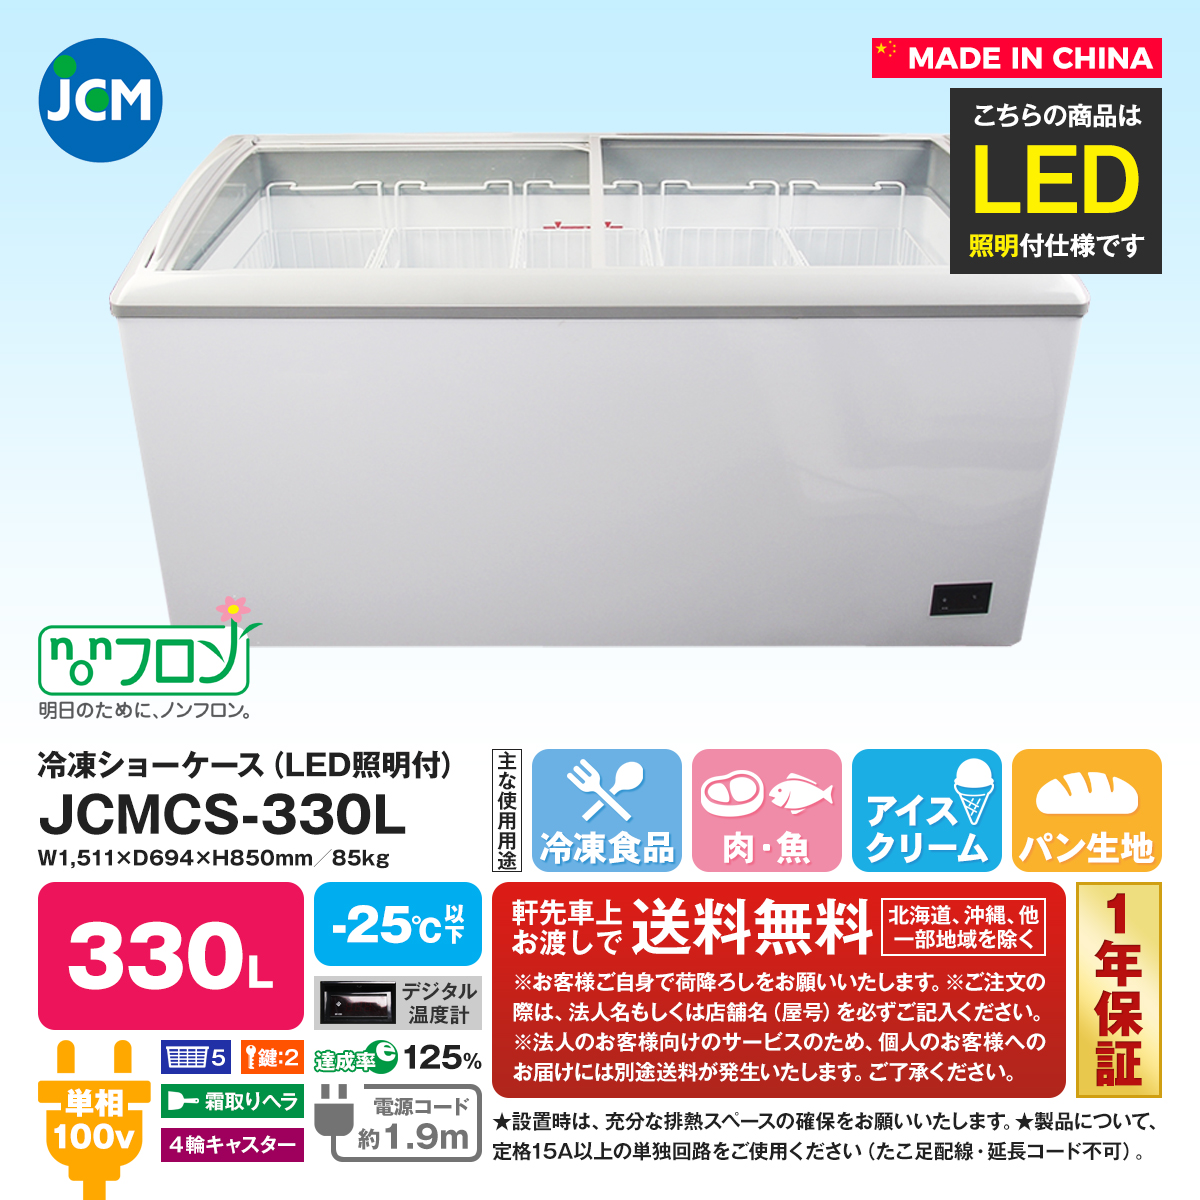 JCM 冷凍ショーケース   JCMCS-240L  LED照明付 ストッカー 業務用冷凍庫 保冷庫 JCMCS-240L スライド扉 ガラス扉 鍵付 大型冷凍庫 補助金 - 3